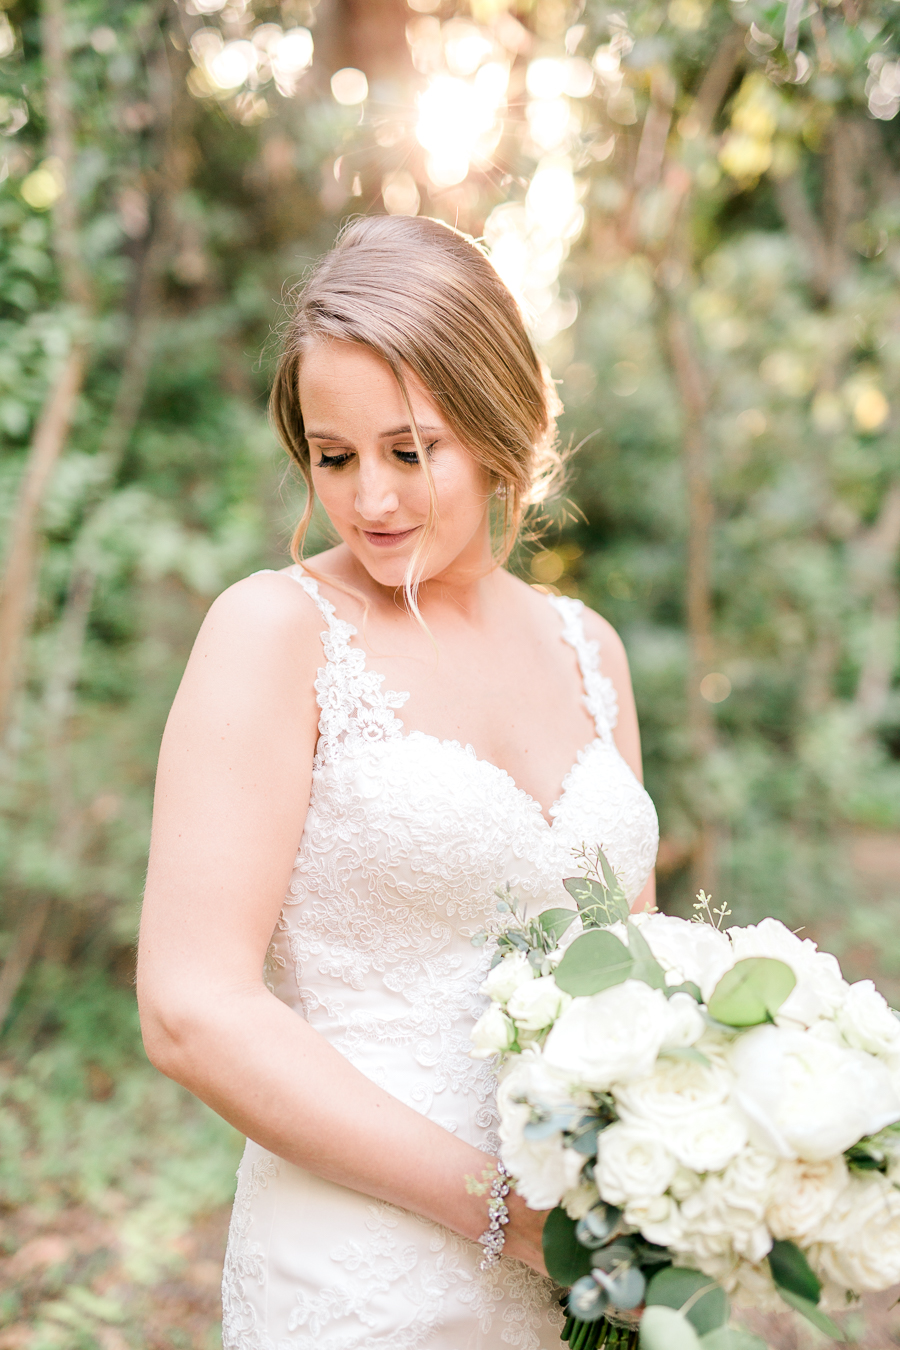 JasonArica-Gale-Vinyards-Chico-Wedding-Kelsey-Hope-Photography-273.jpg